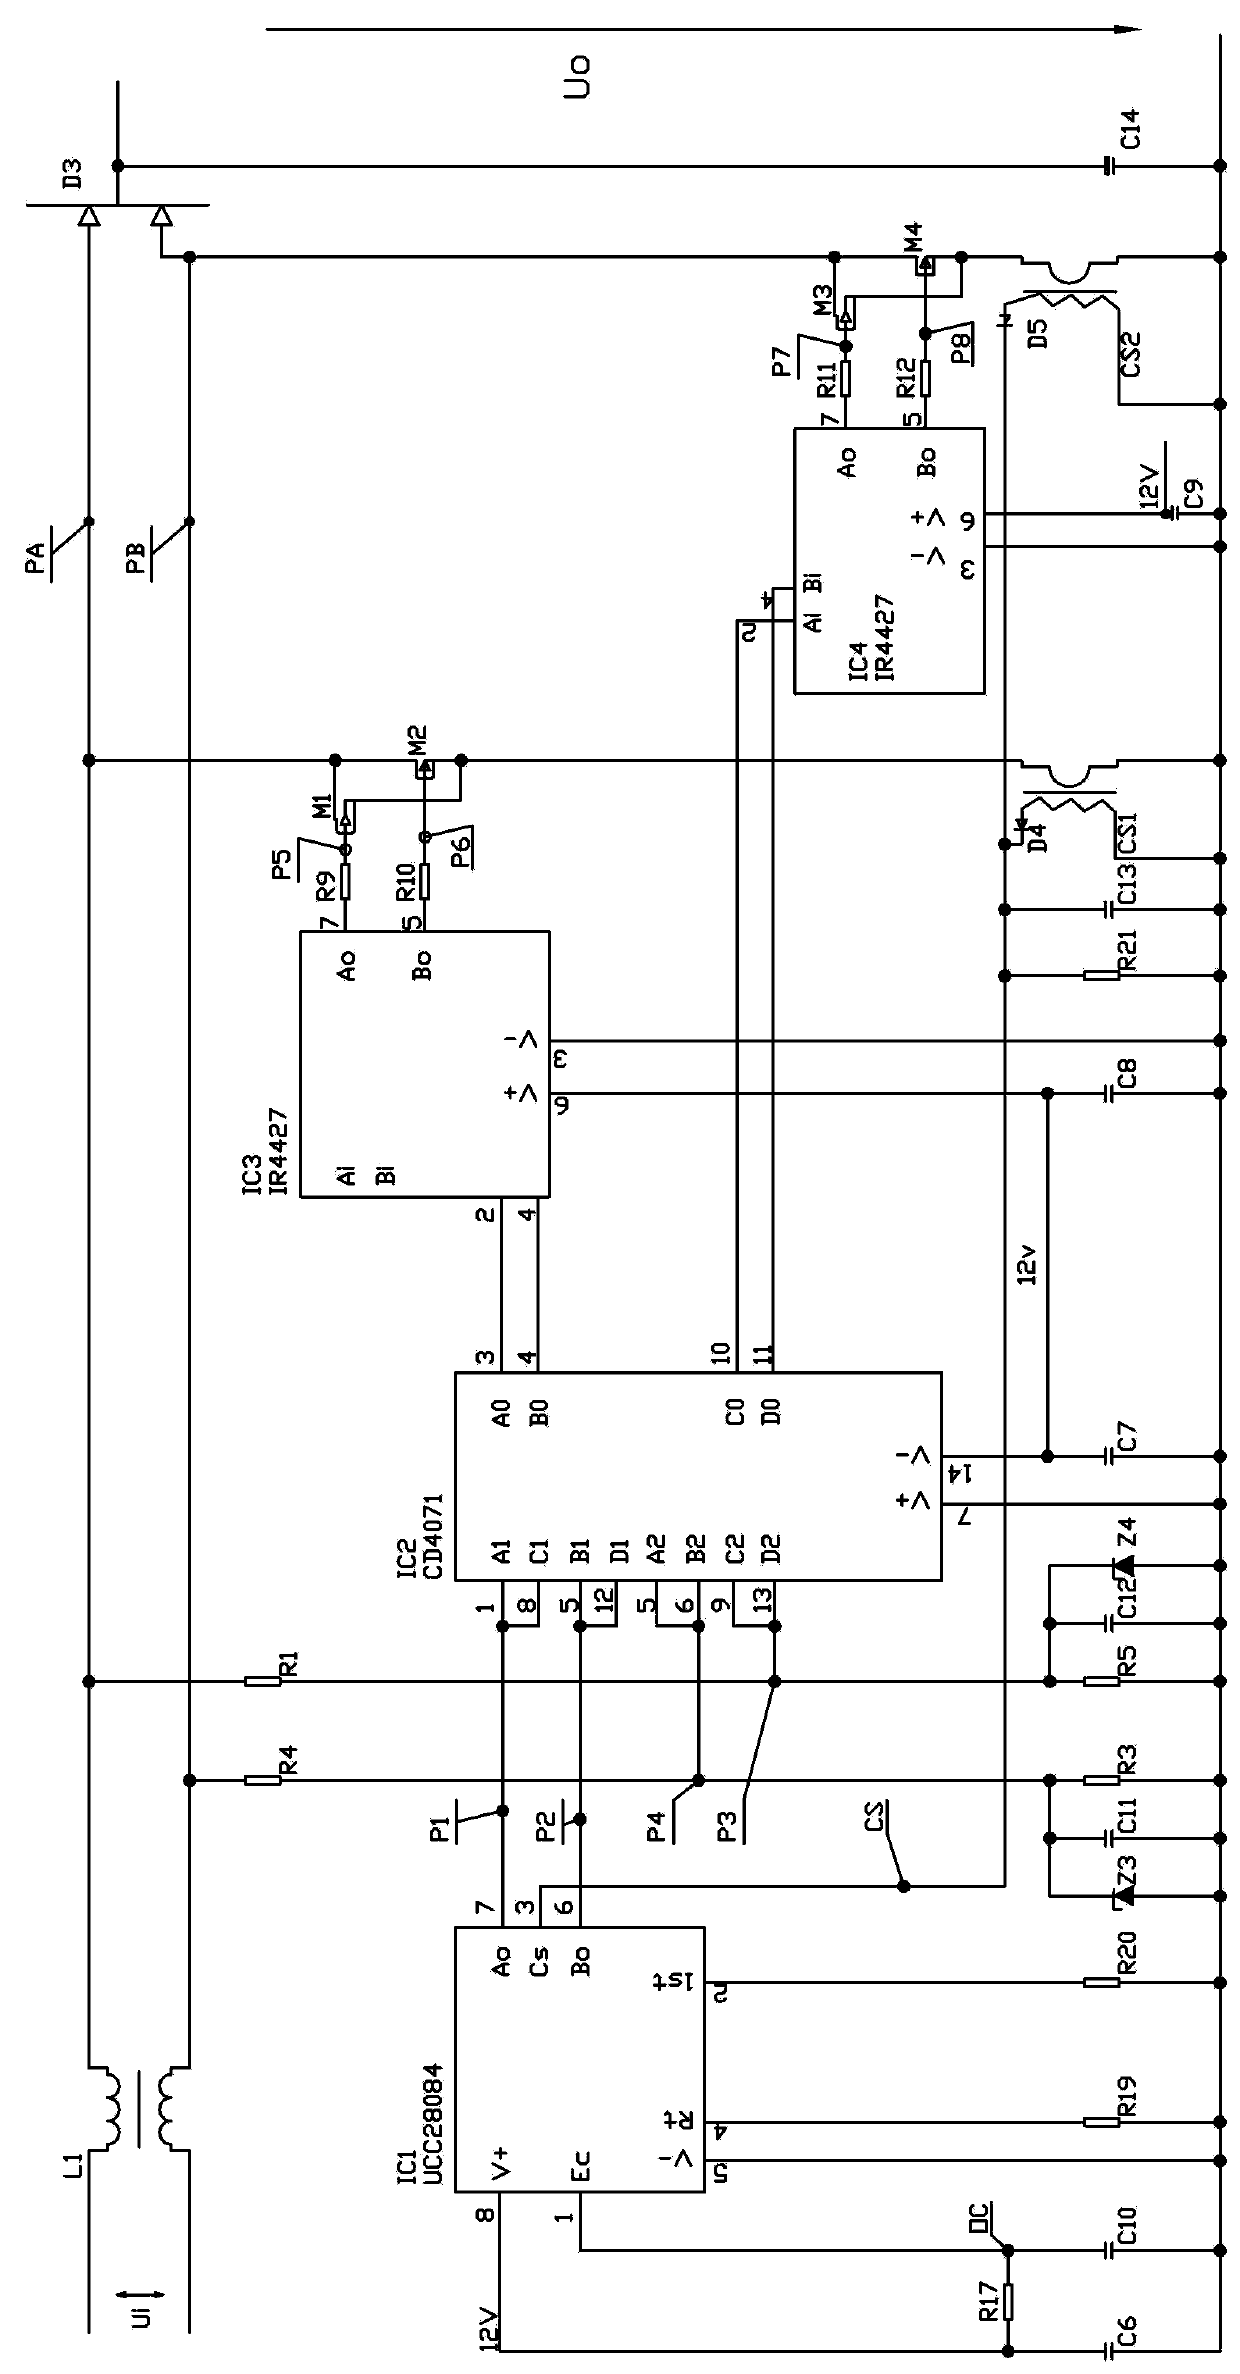 High-efficiency BOOST circuit